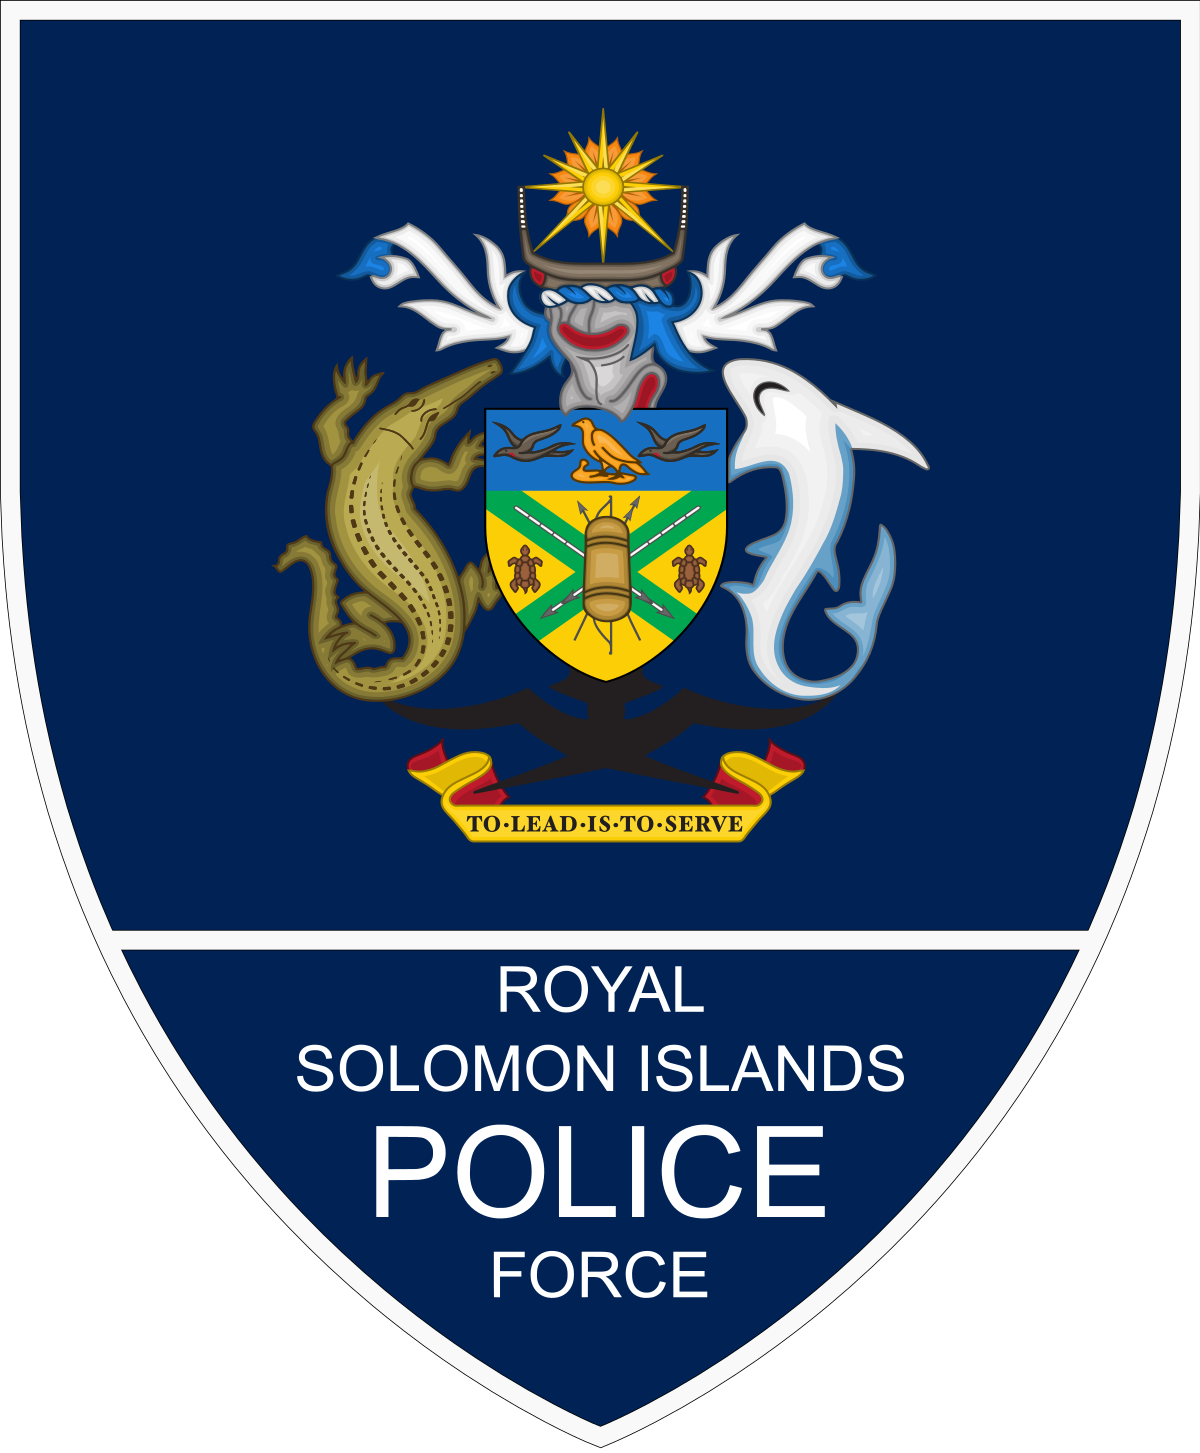 Police visit Honiara’s ‘hotspots’ - In-depth Solomons